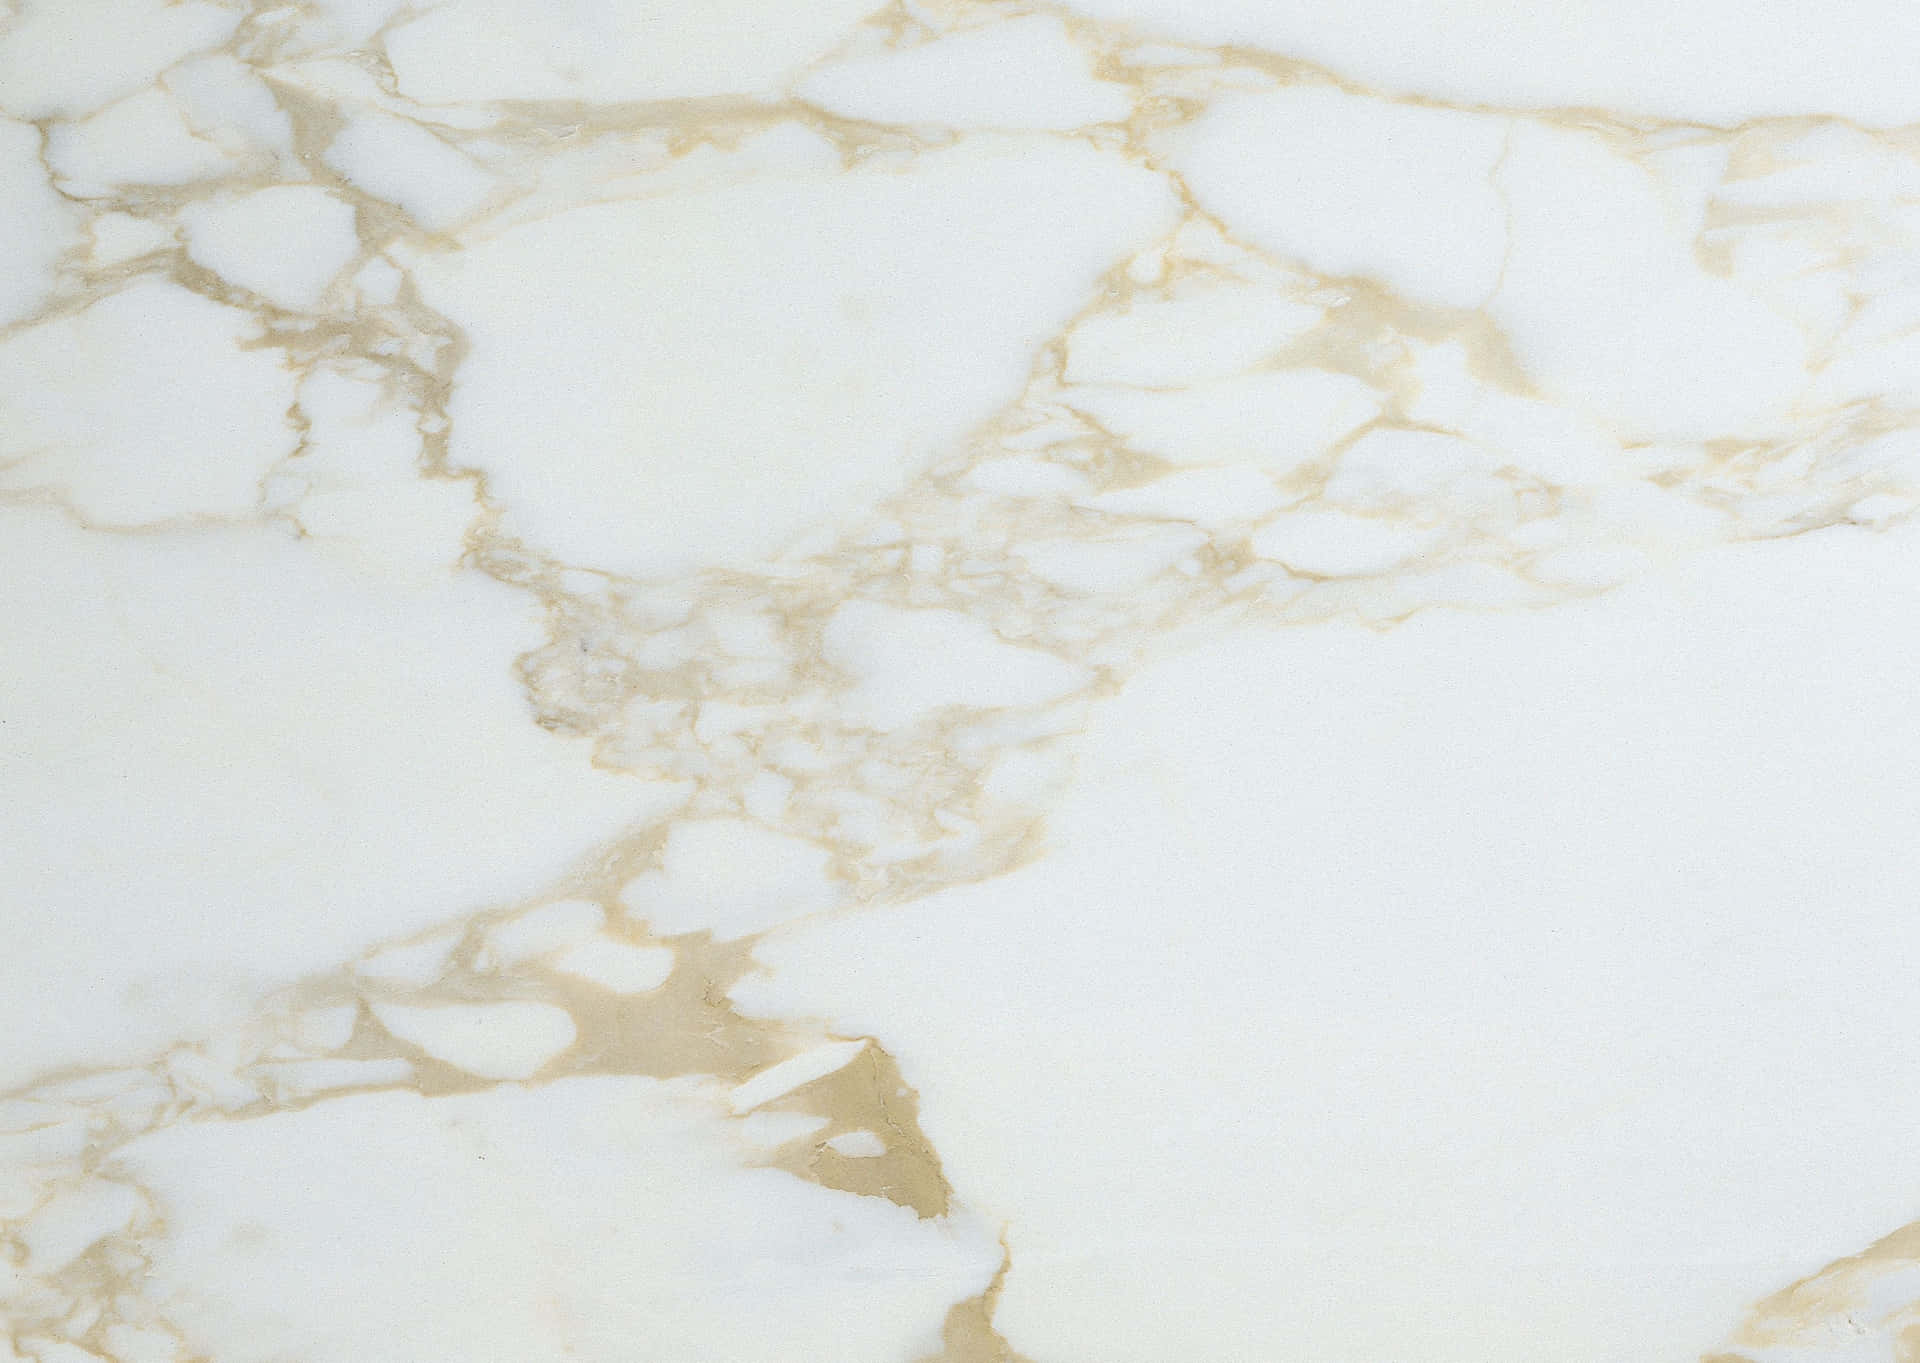 Shiny white marble texture background